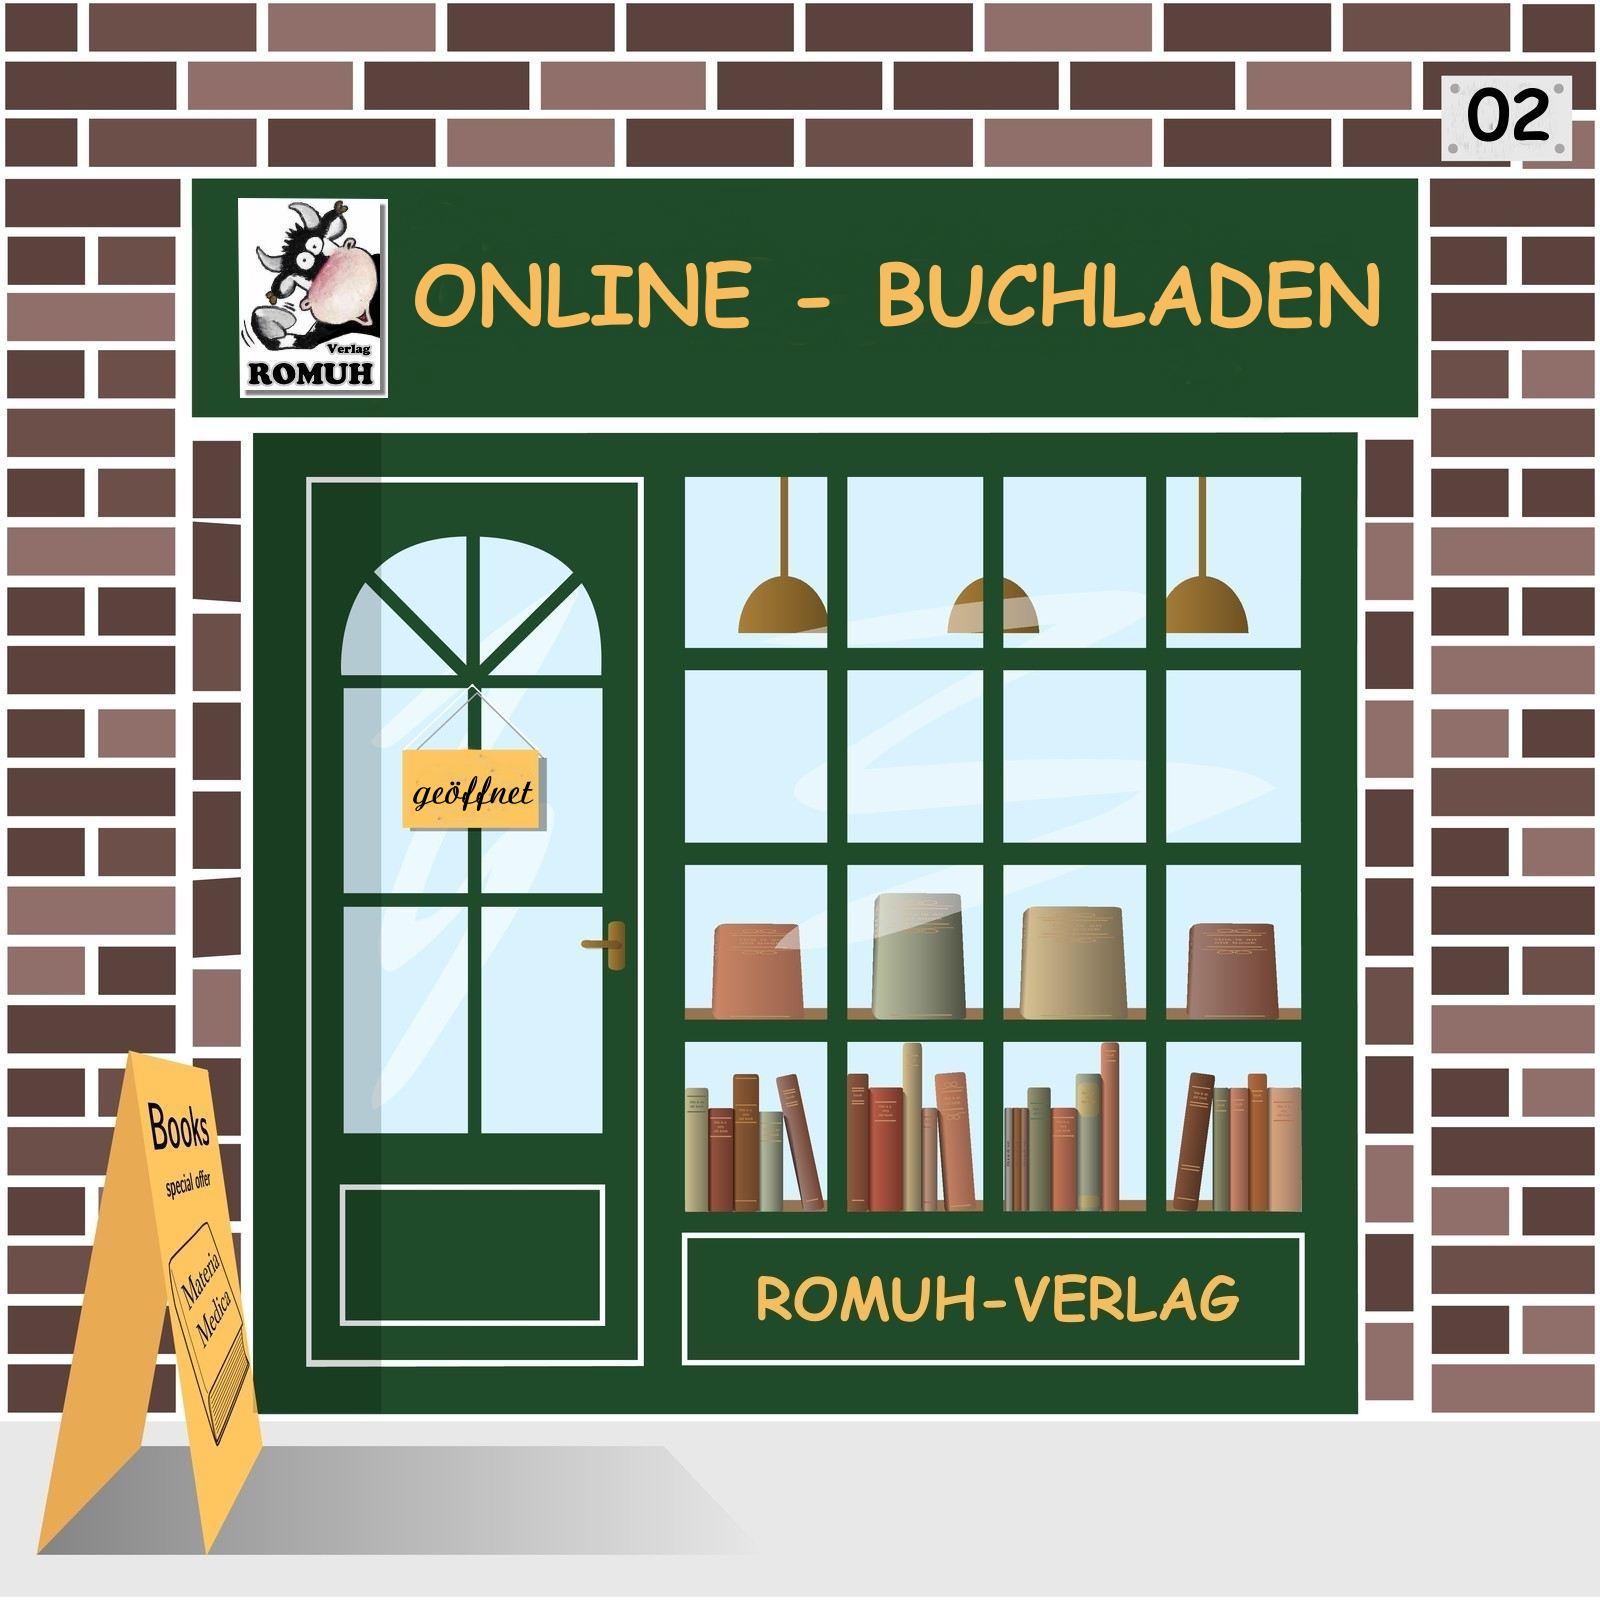 Buchladen_ROMUH